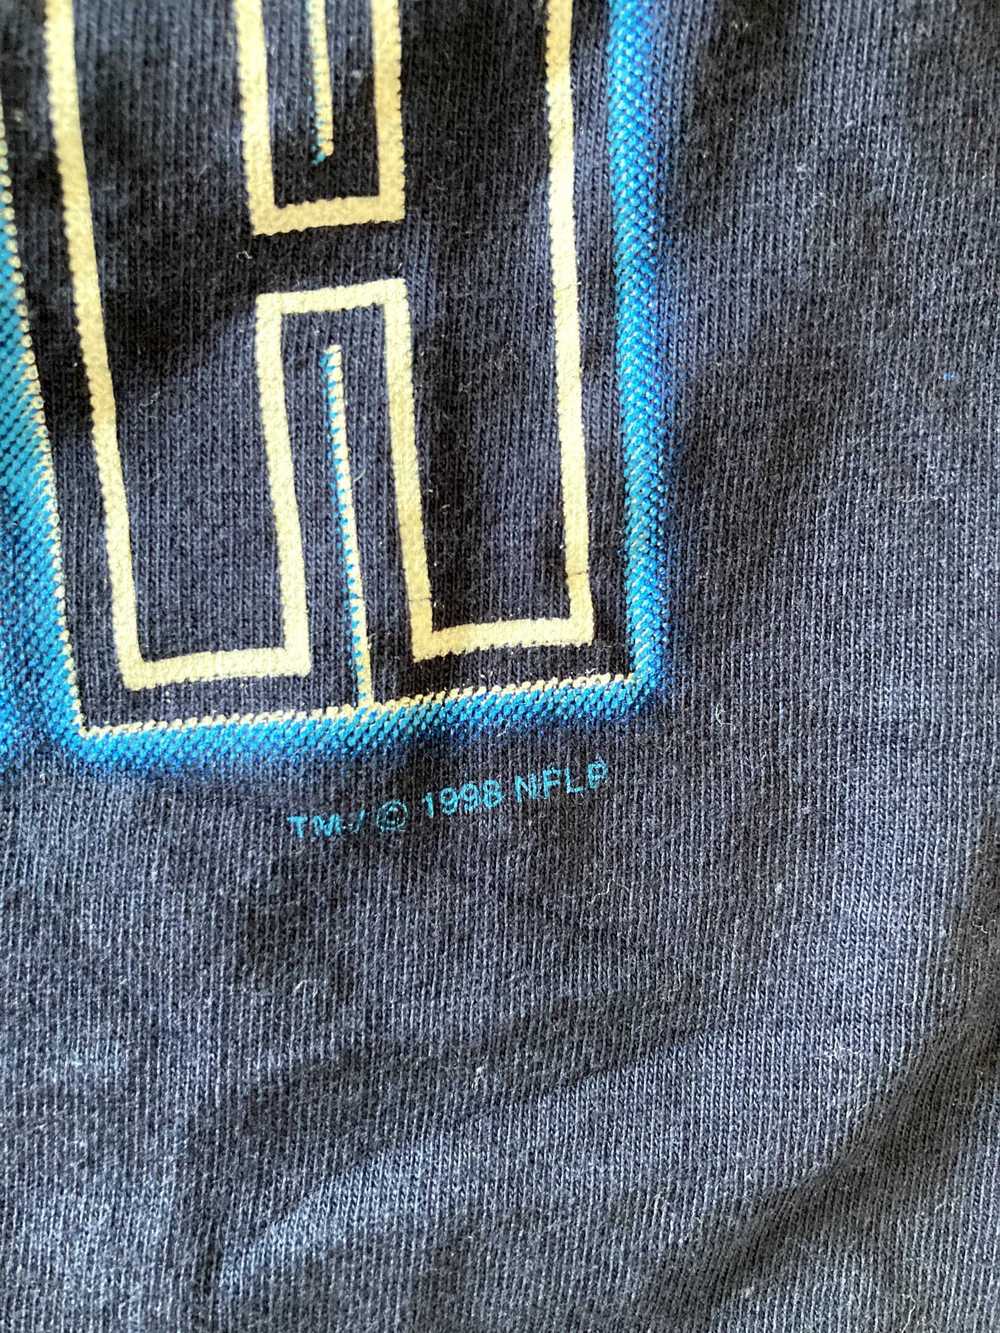 Emmitt Smith Dallas Cowboys 1998 T-Shirt XL - image 4